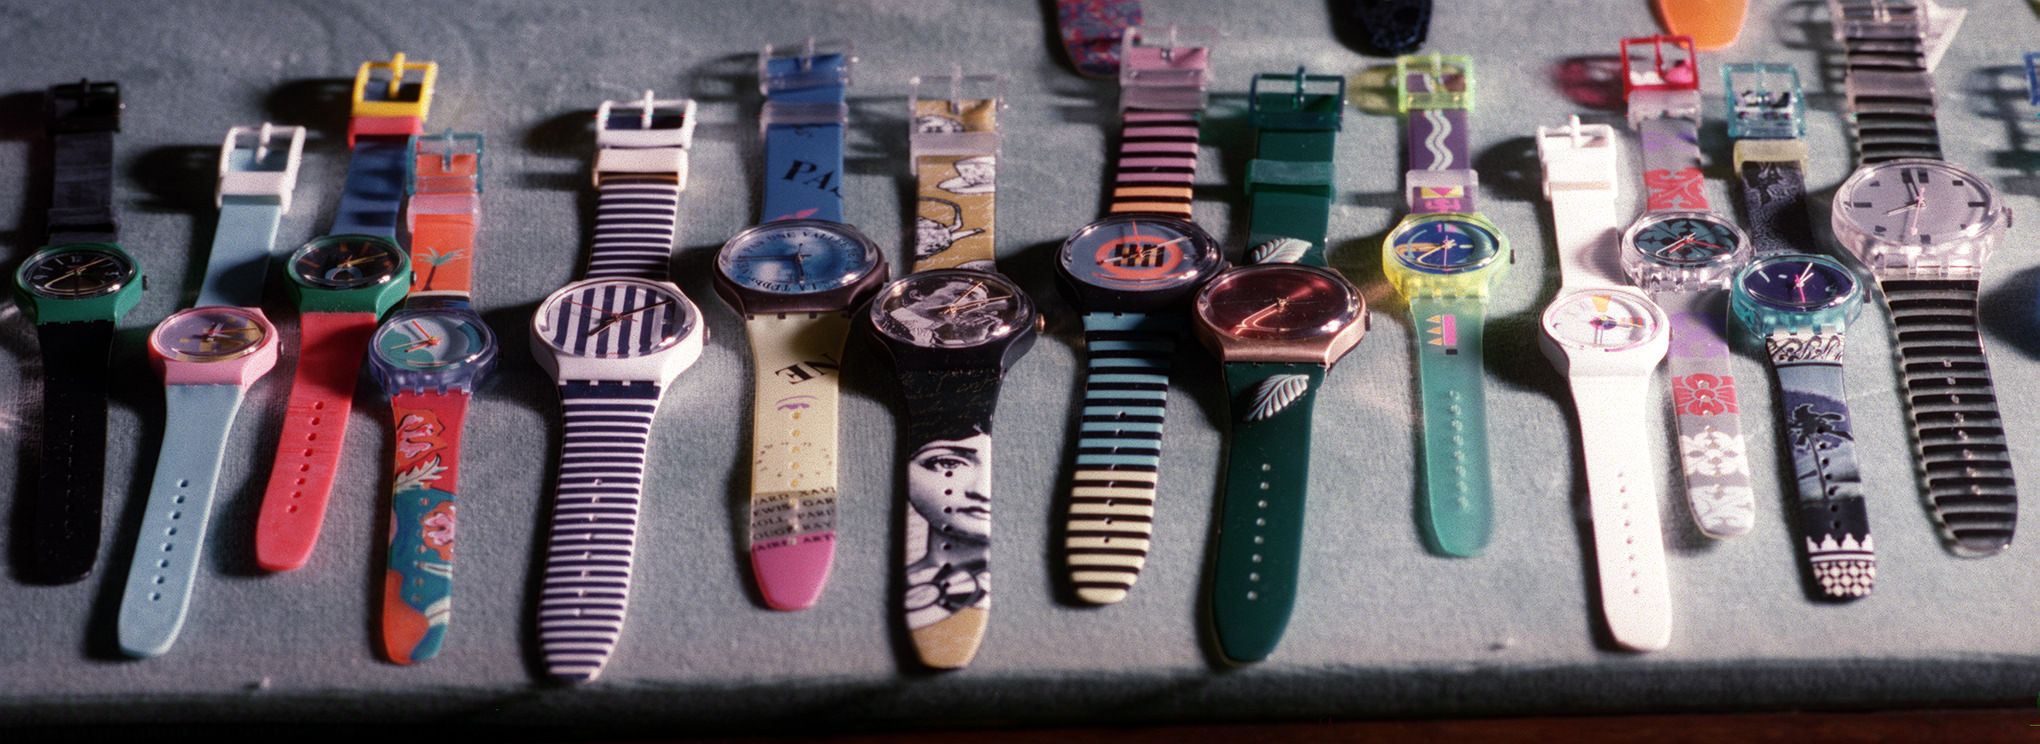 SOTC] My European mechanical movement vintage watches : r/Watches